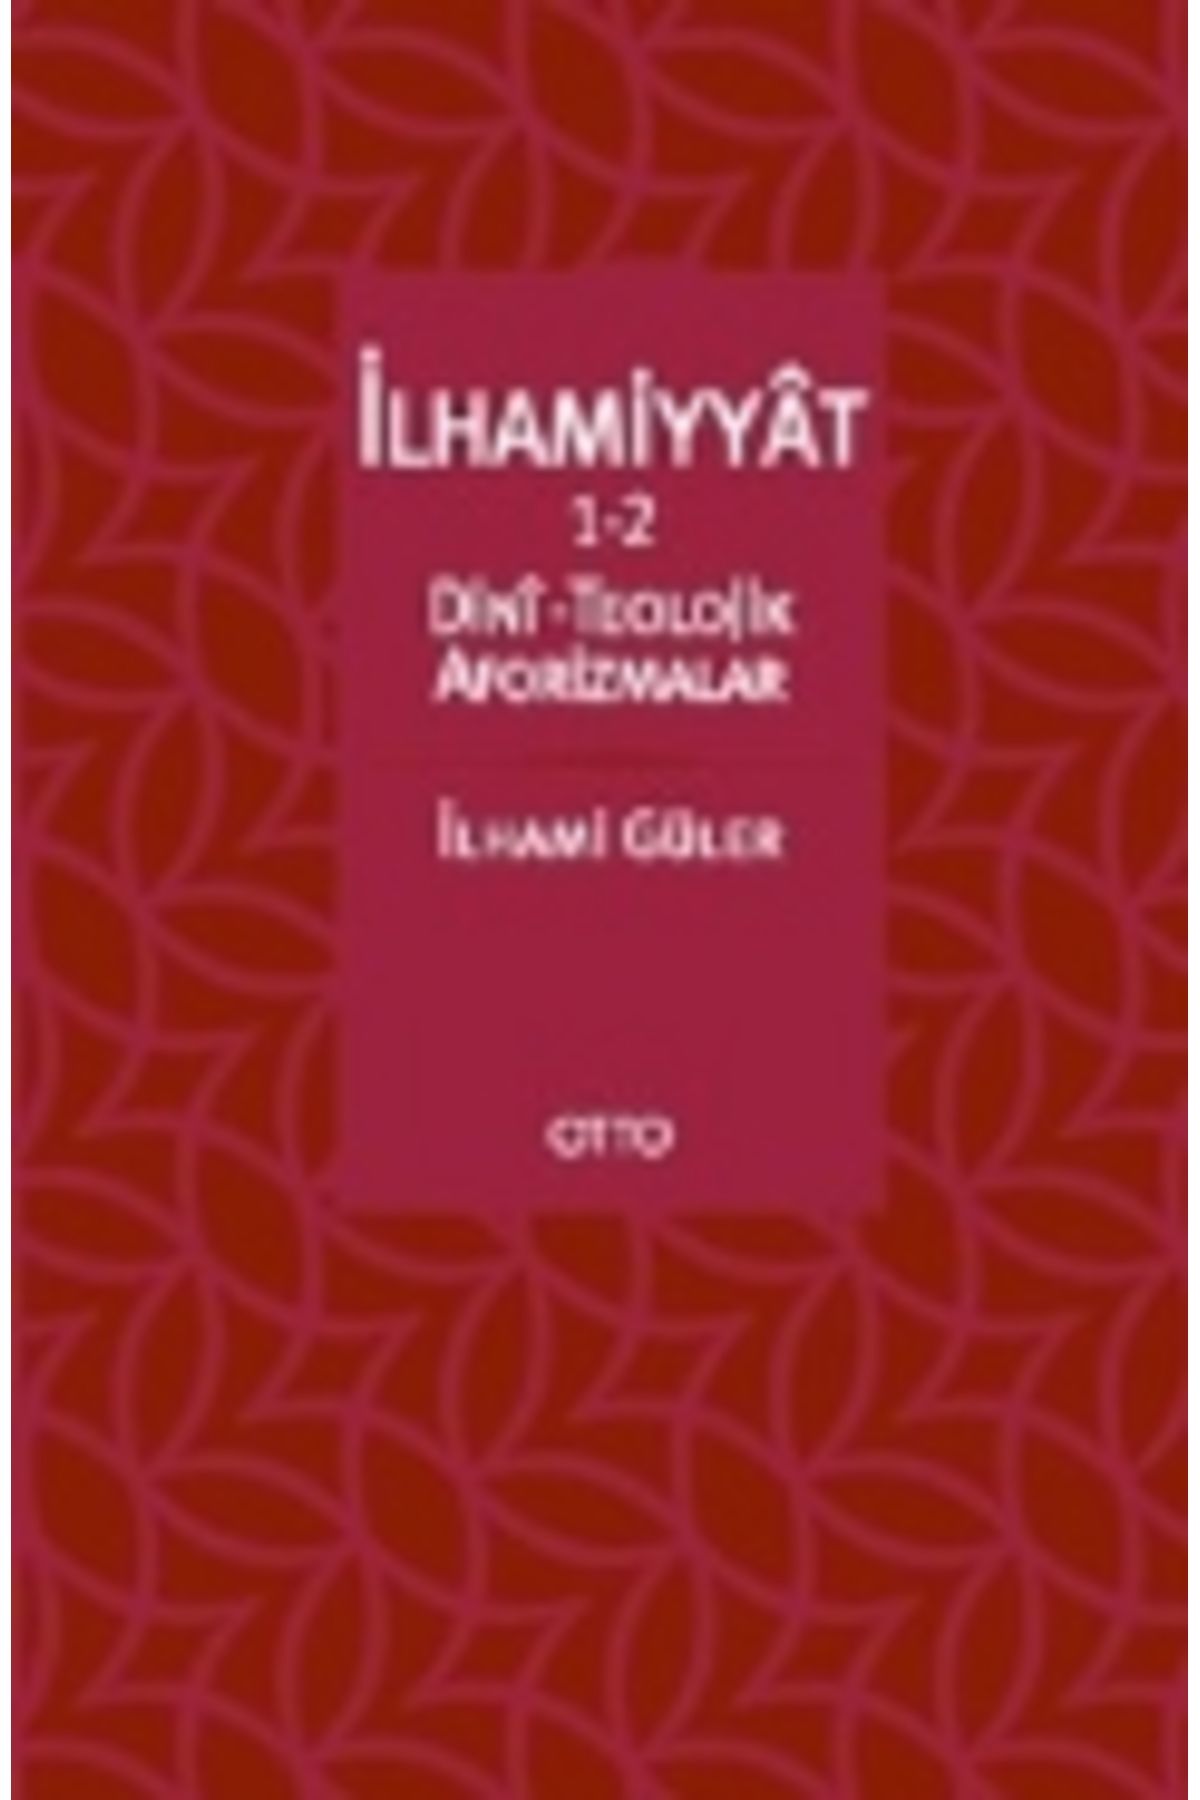 Otto Yayınları İlhamiyyat 1-2  Dini-Teolojik Aforizmalar